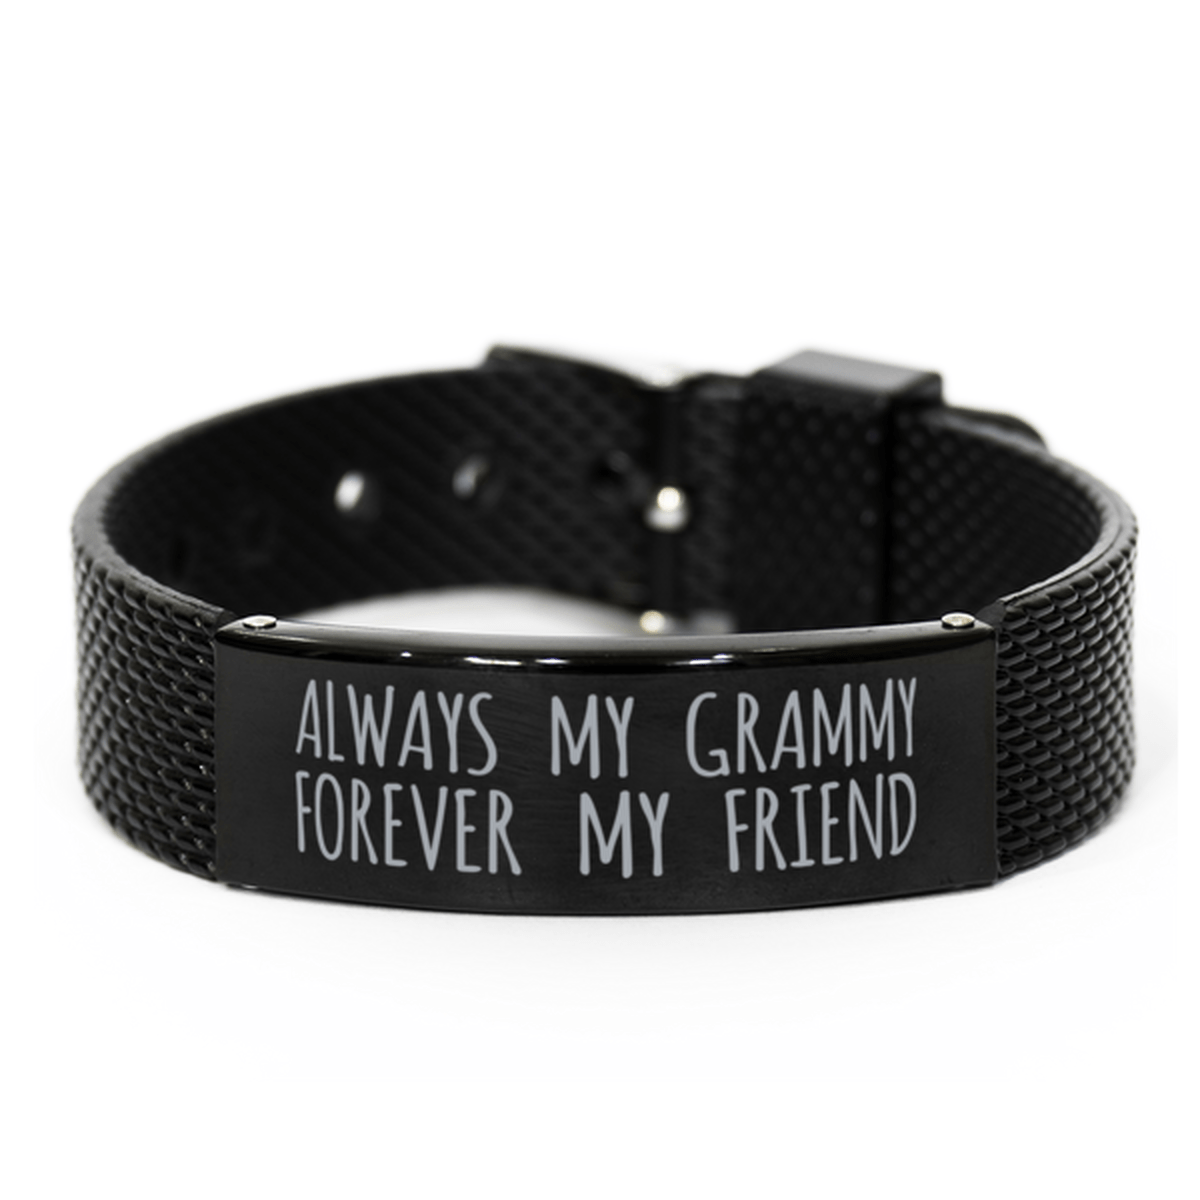 Inspirational Grammy Black Shark Mesh Bracelet, Always My Grammy Forever My Friend, Best Birthday Gifts for Family Friends